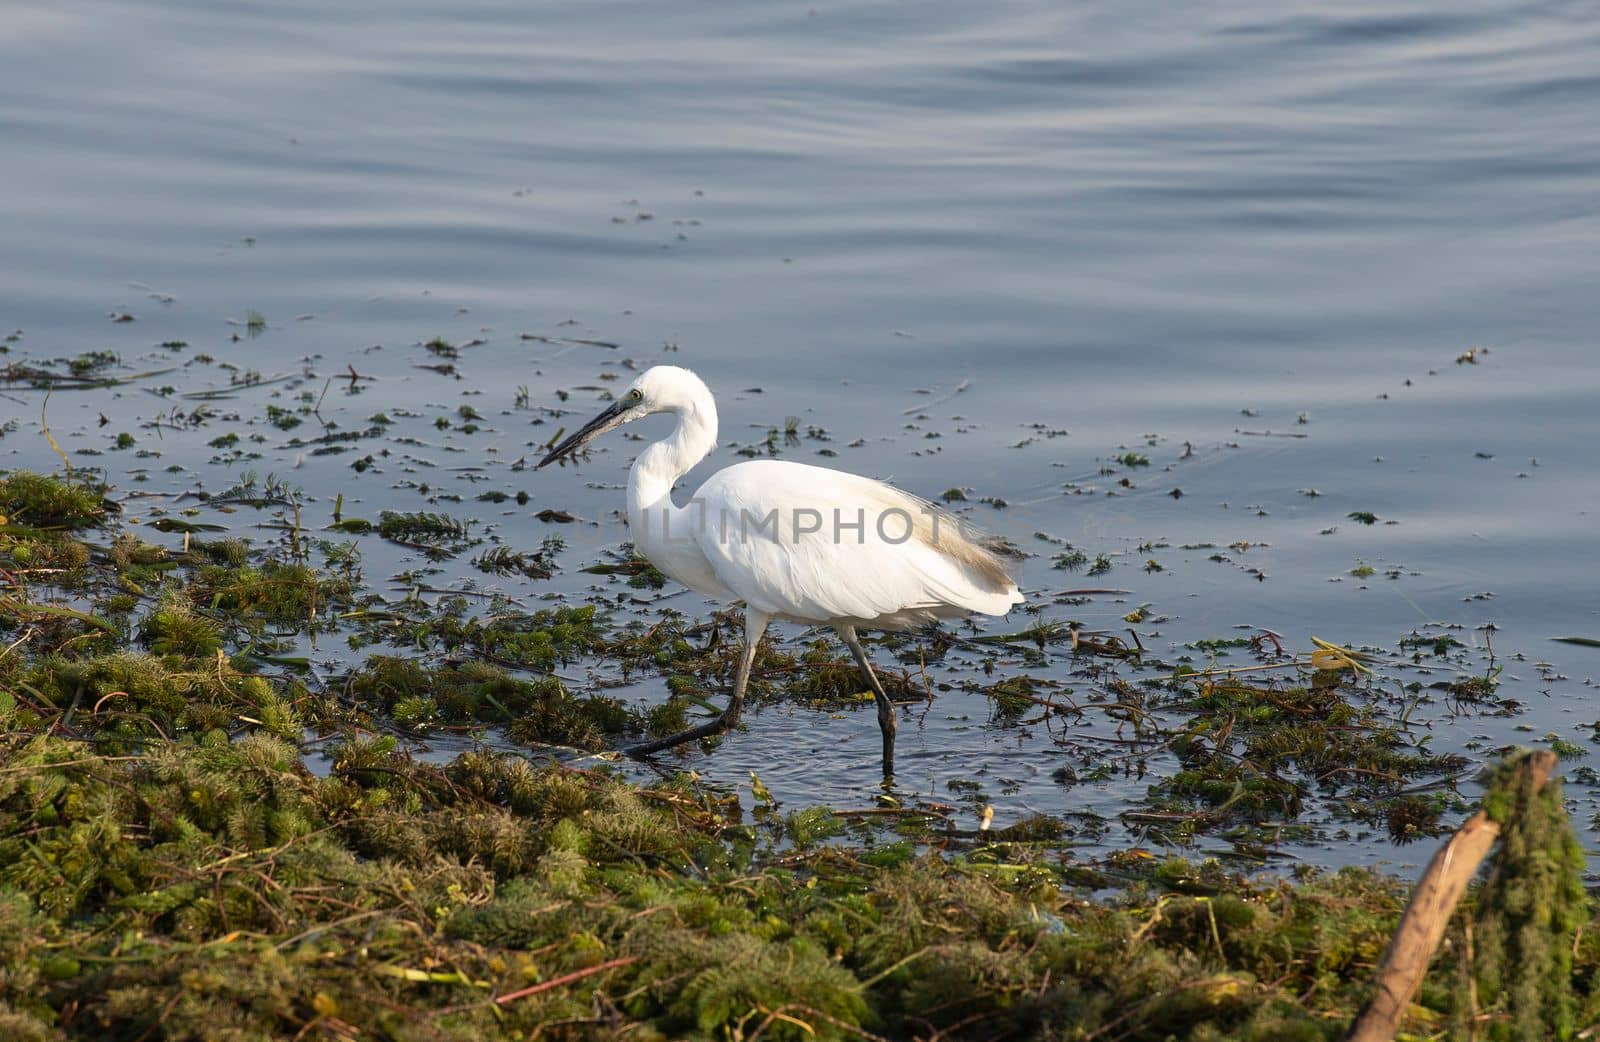 Great egret walking in grass reeds by river bank by paulvinten